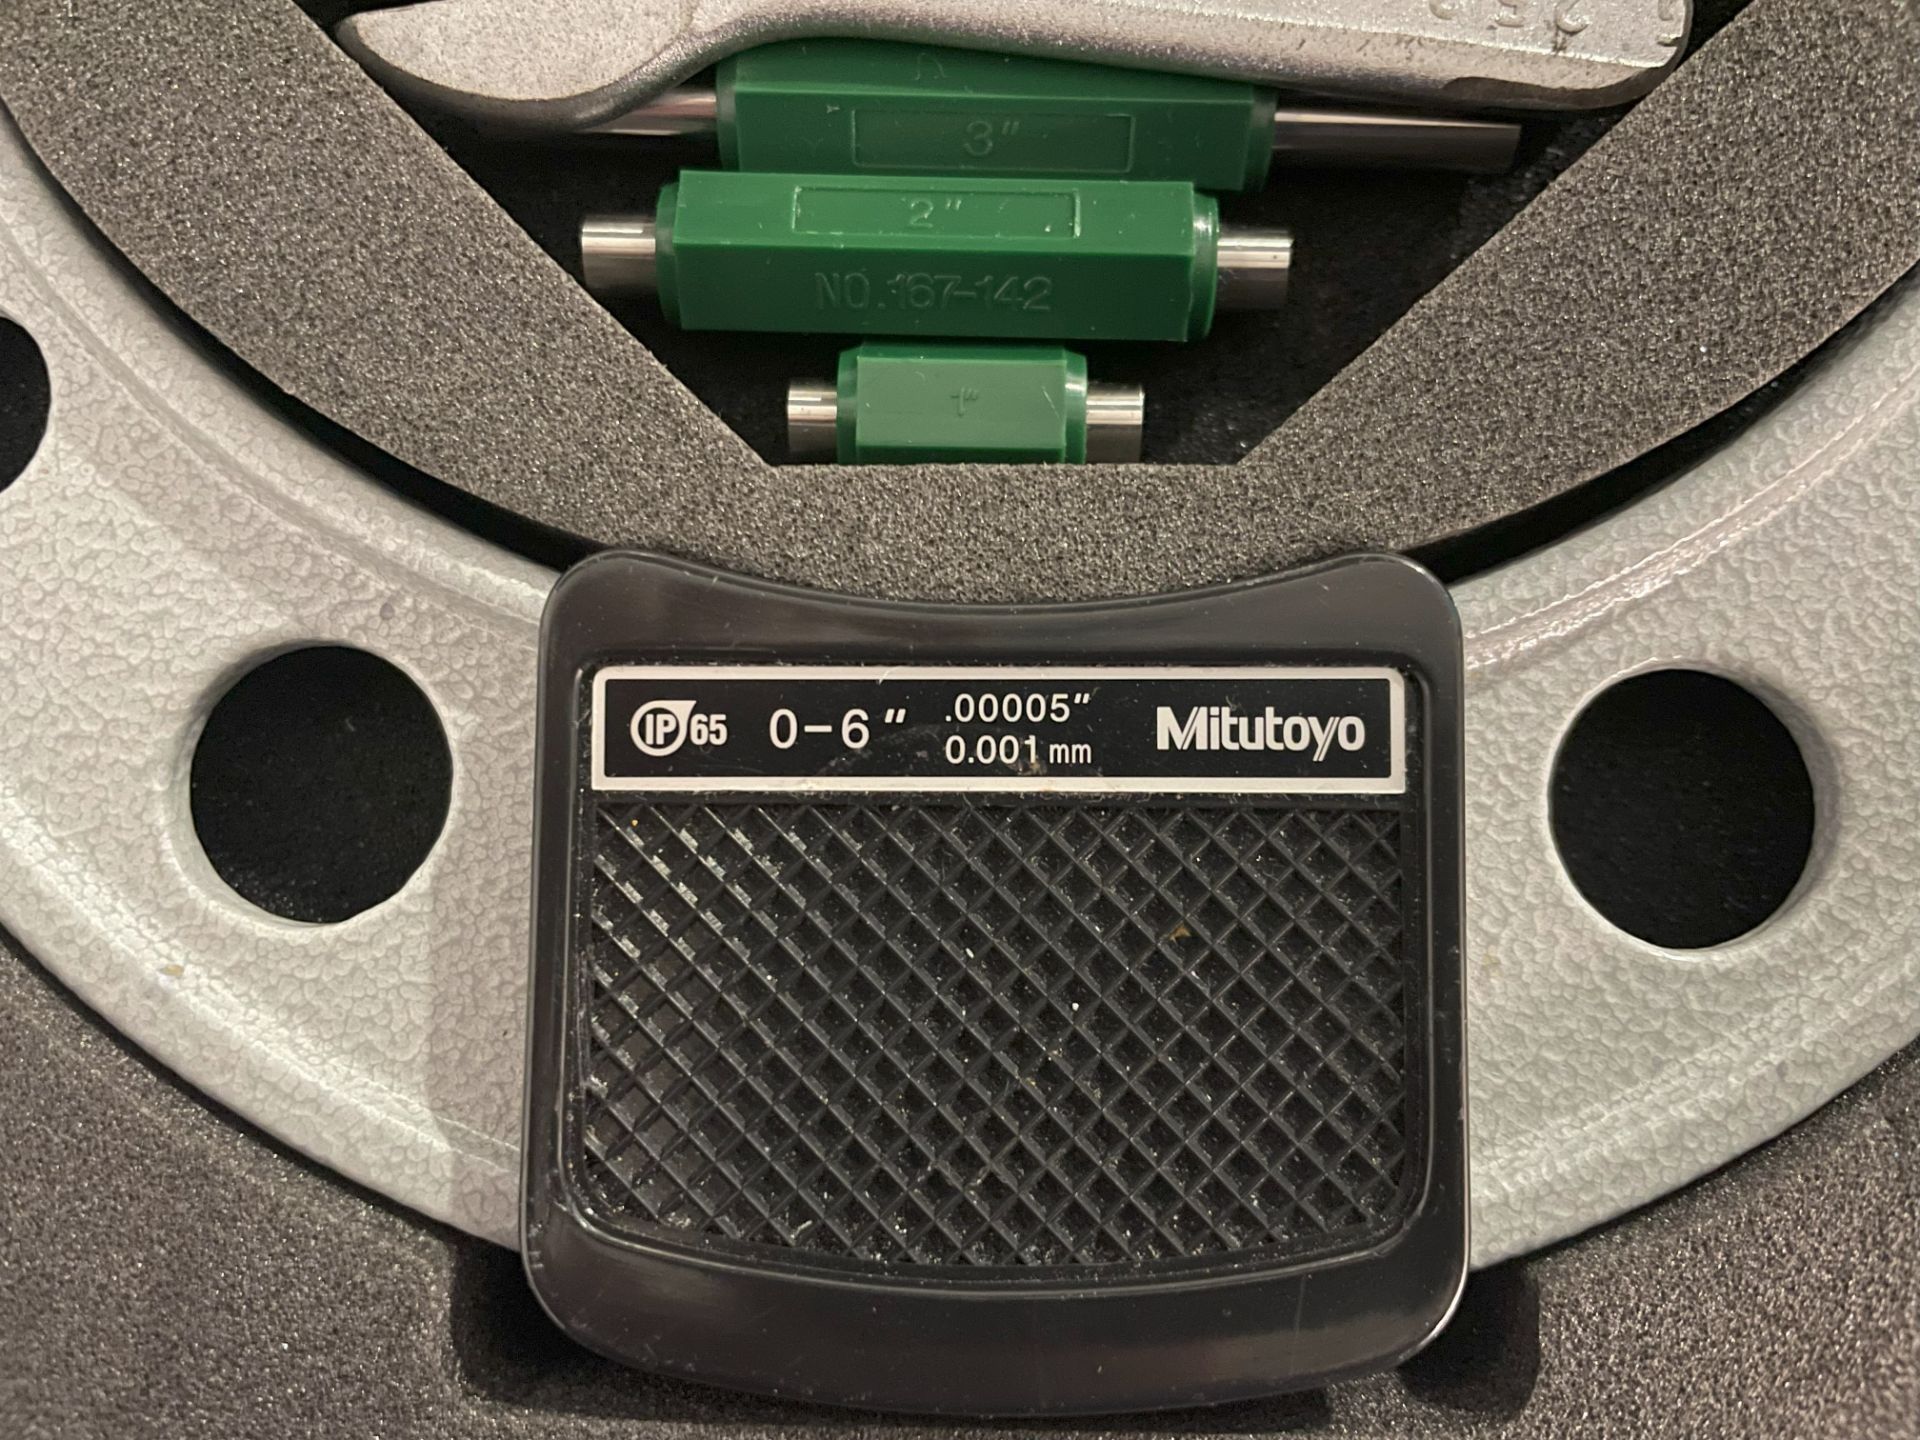 Mitutoyo 0 - 6 Inch Digital Micrometer - Image 2 of 3